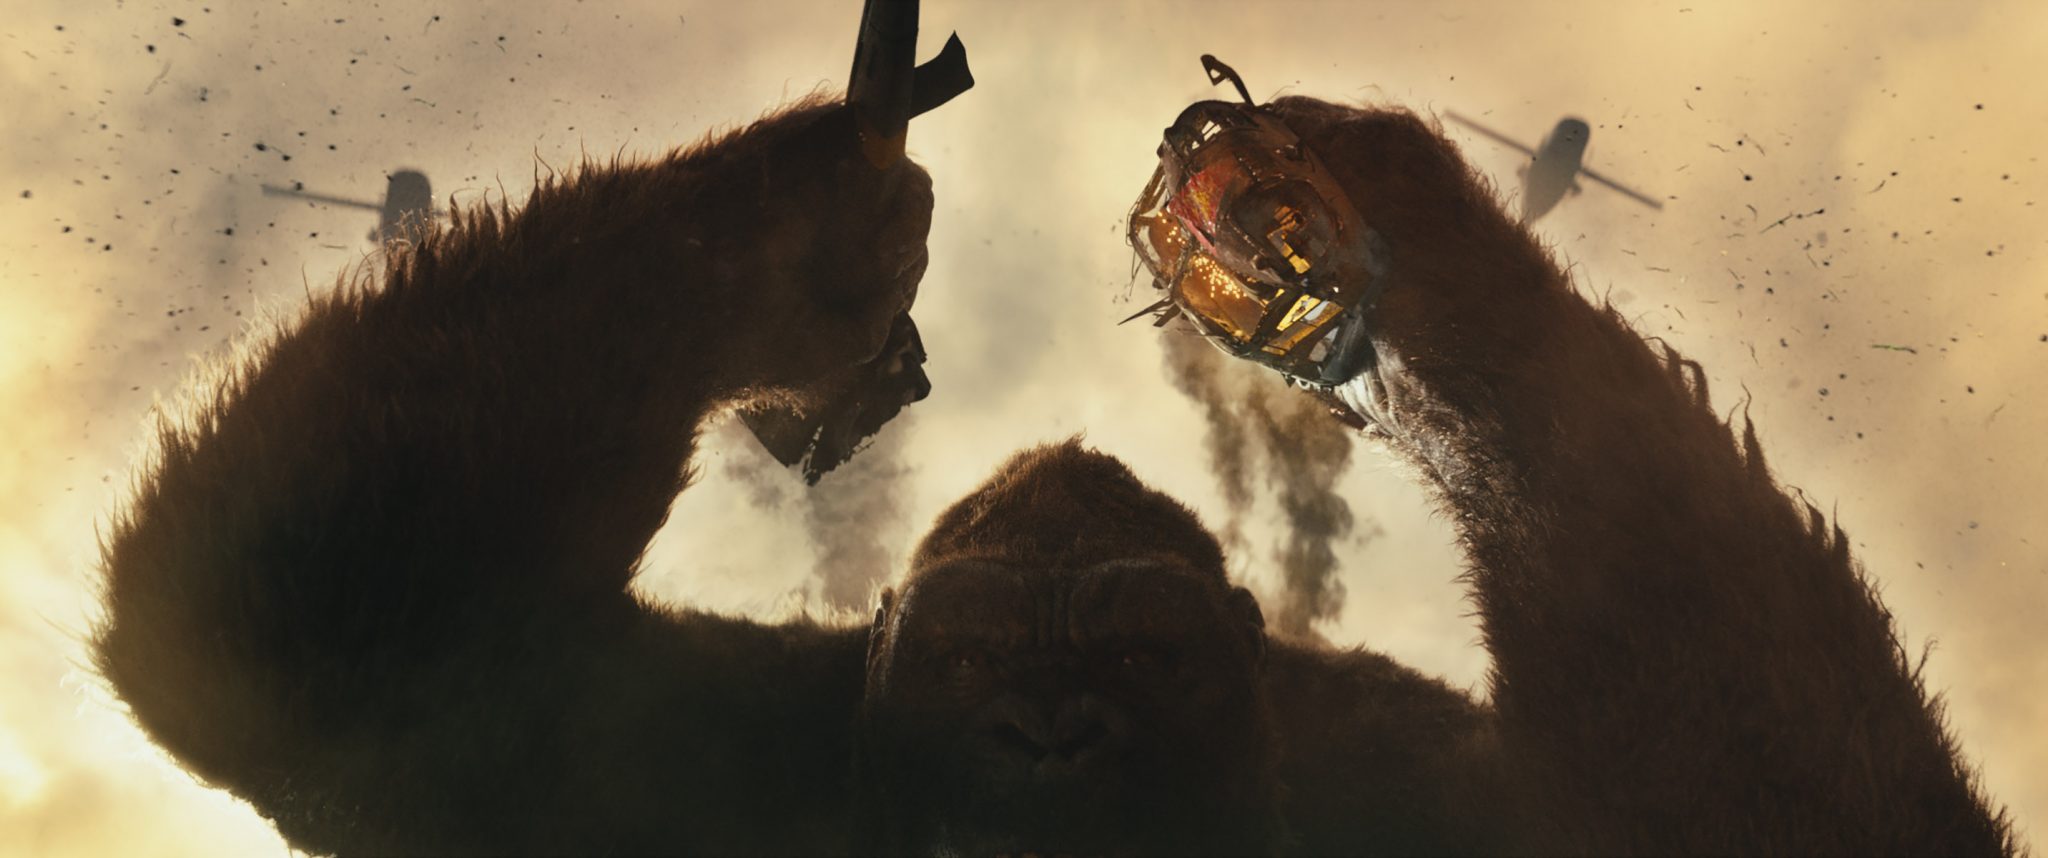 Kong, Skull Island (TF1) : pourquoi King Kong est-il devenu si